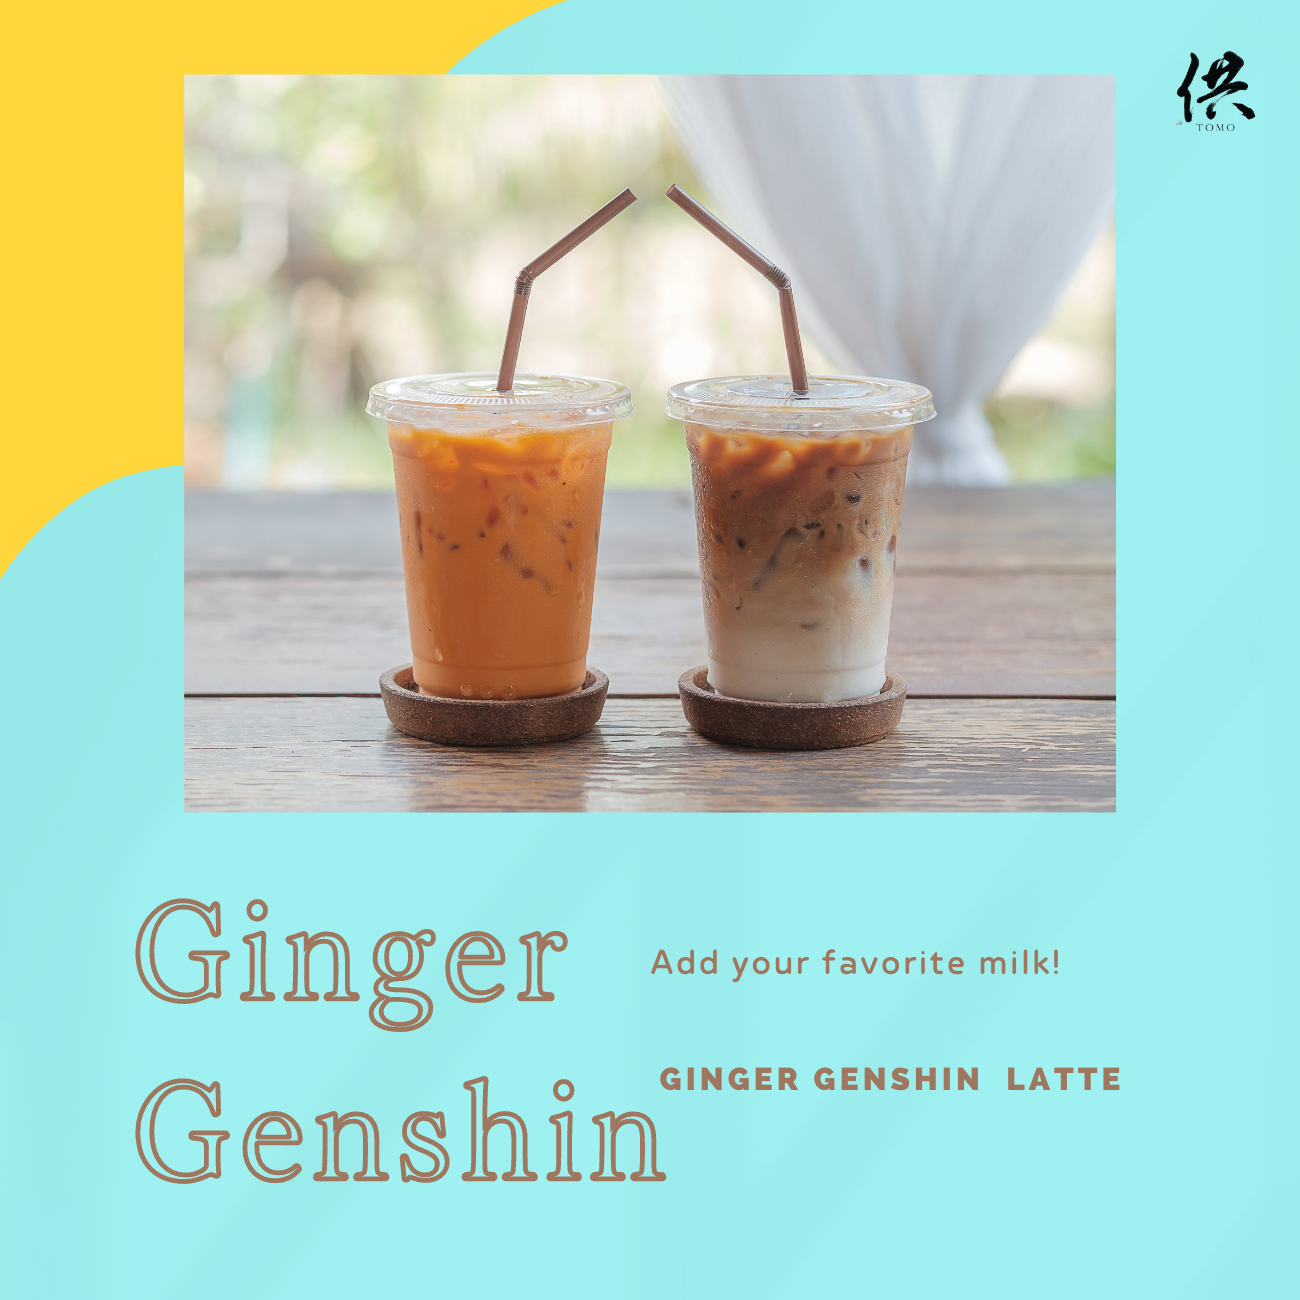 Add milk and enjoy your Ginger Genshin Latte